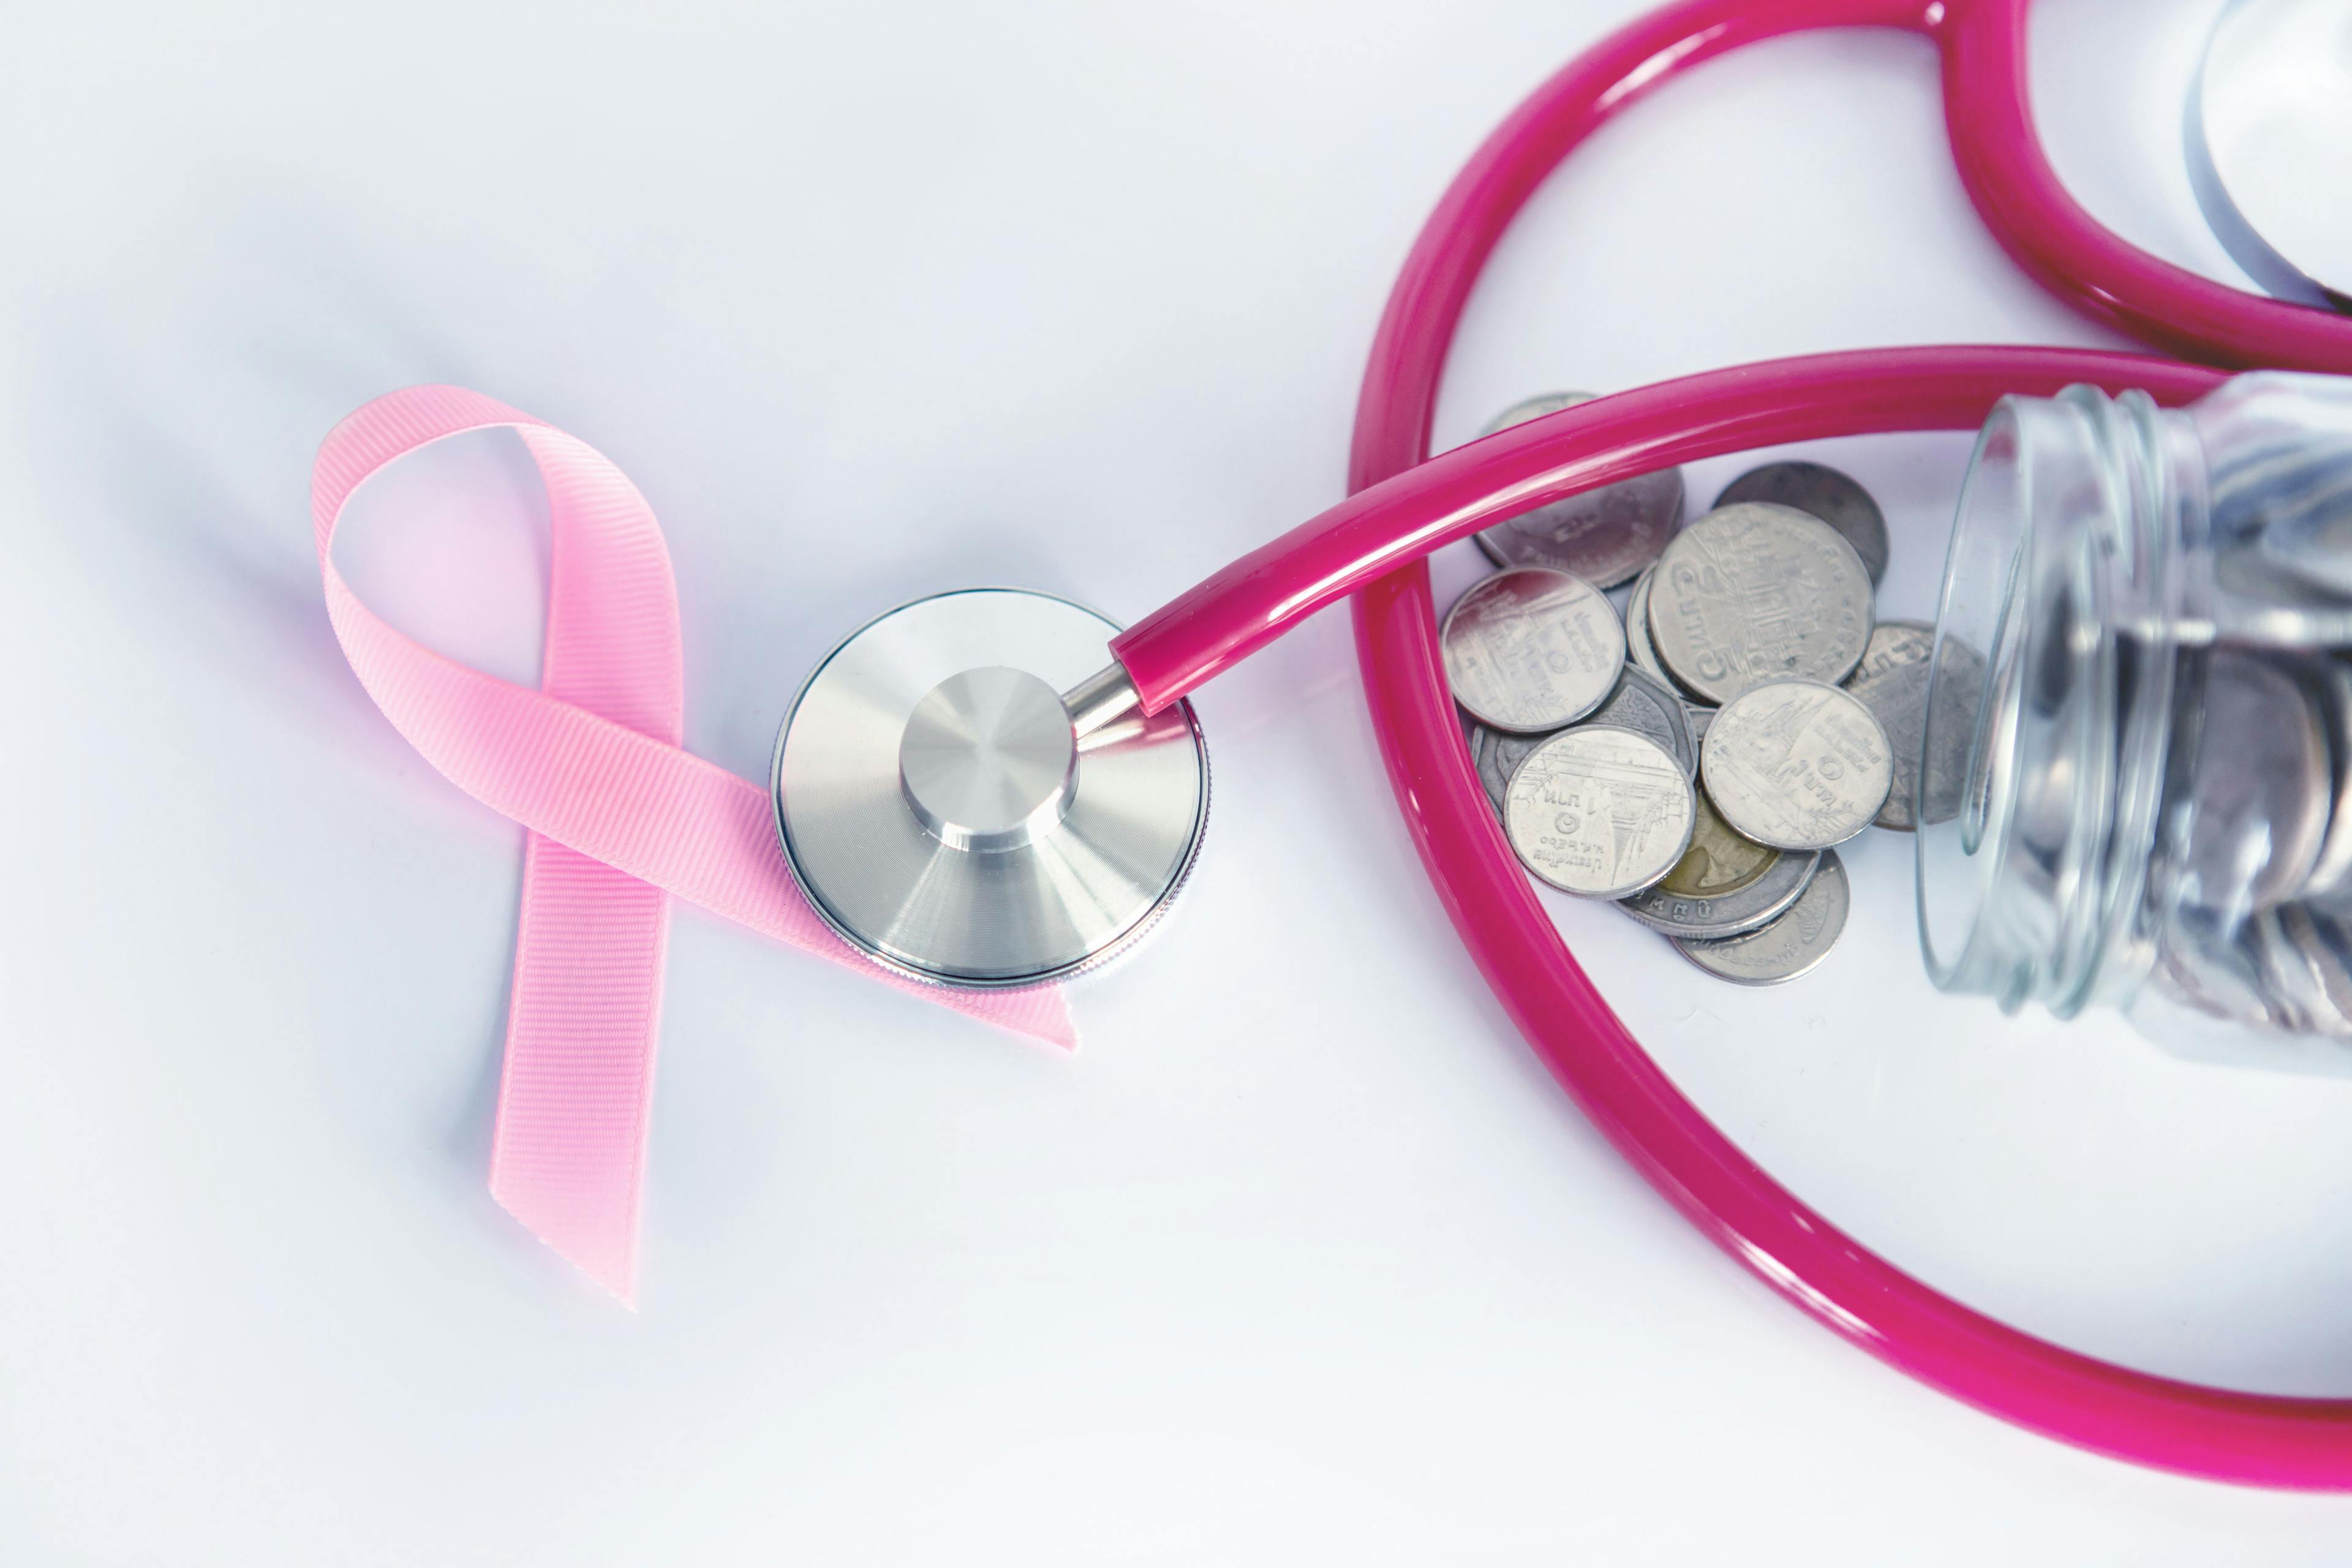 Breast cancer costs. | Image Credit: Cozine - stock.adobe.com